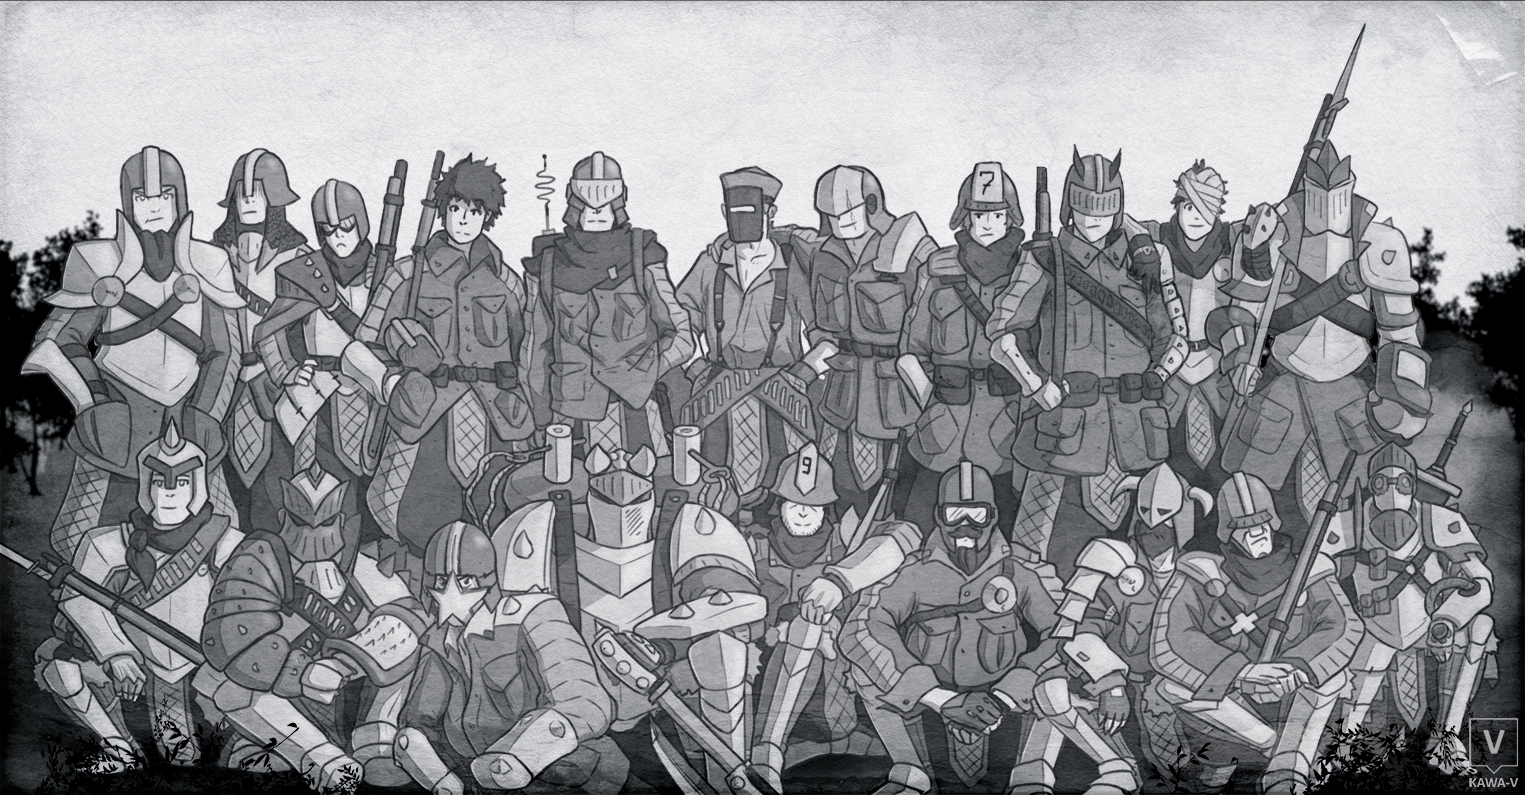 Kawa's Army